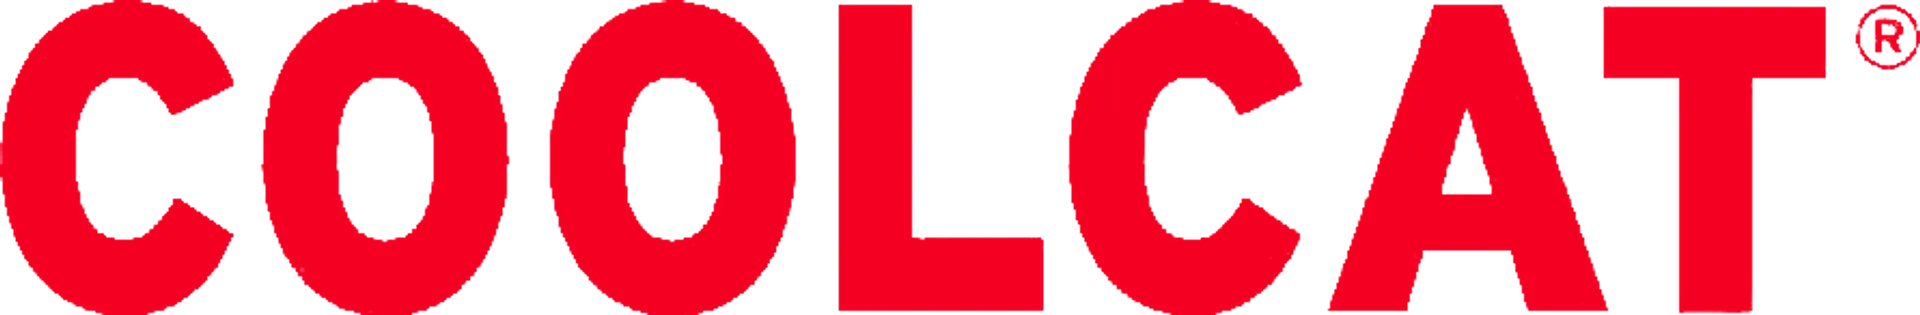 COOLCAT logo